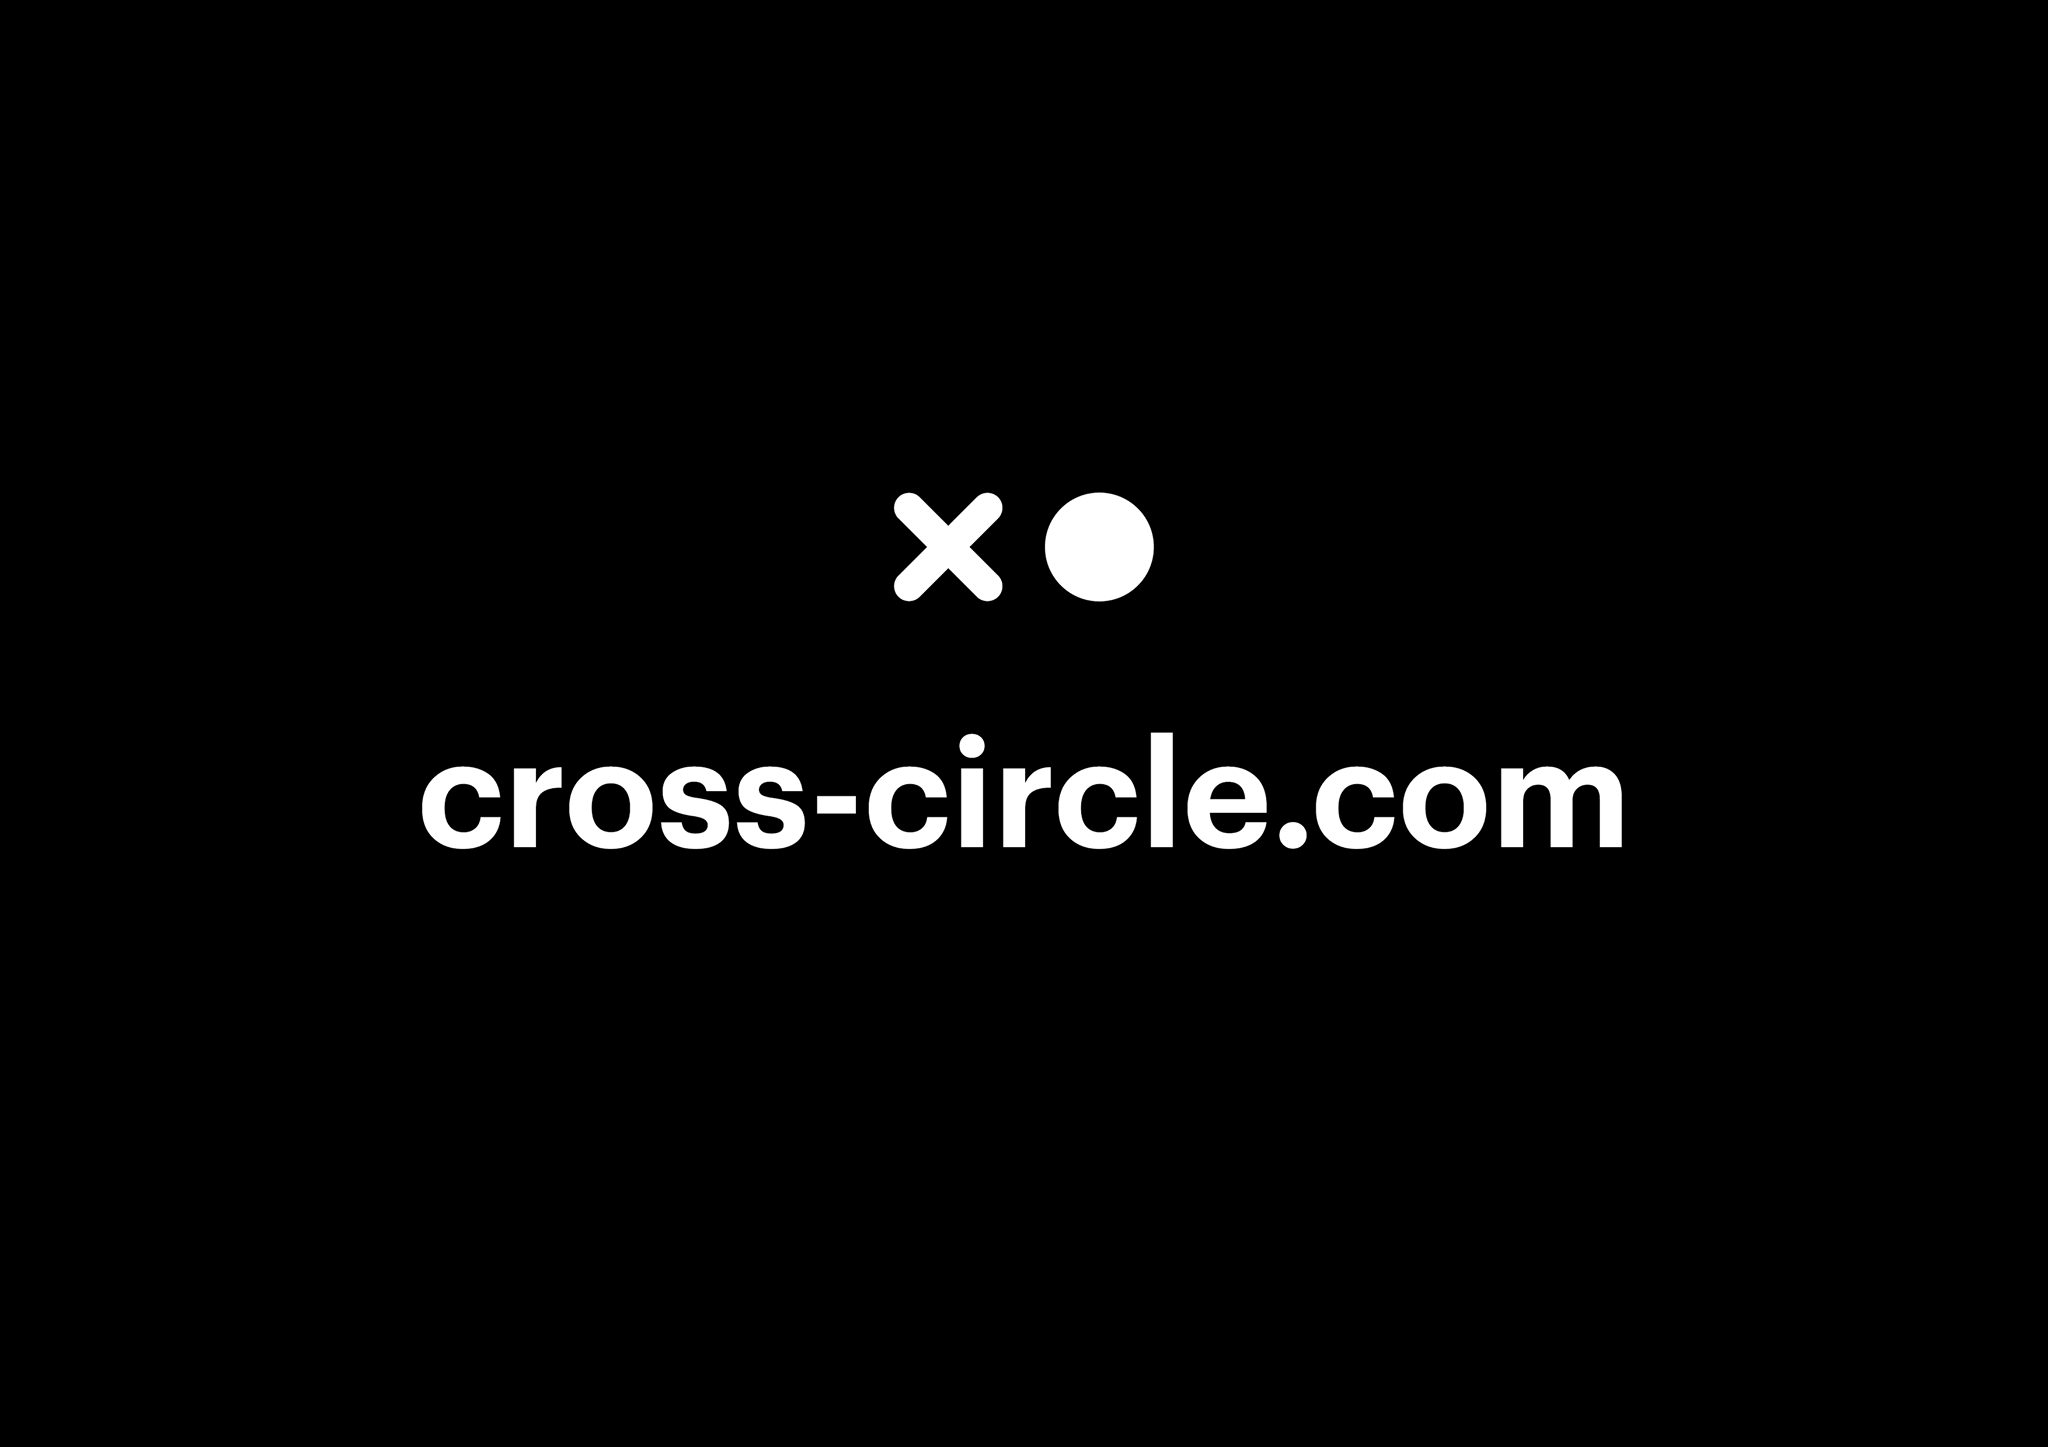 平面設計推介: CrossCircle.com